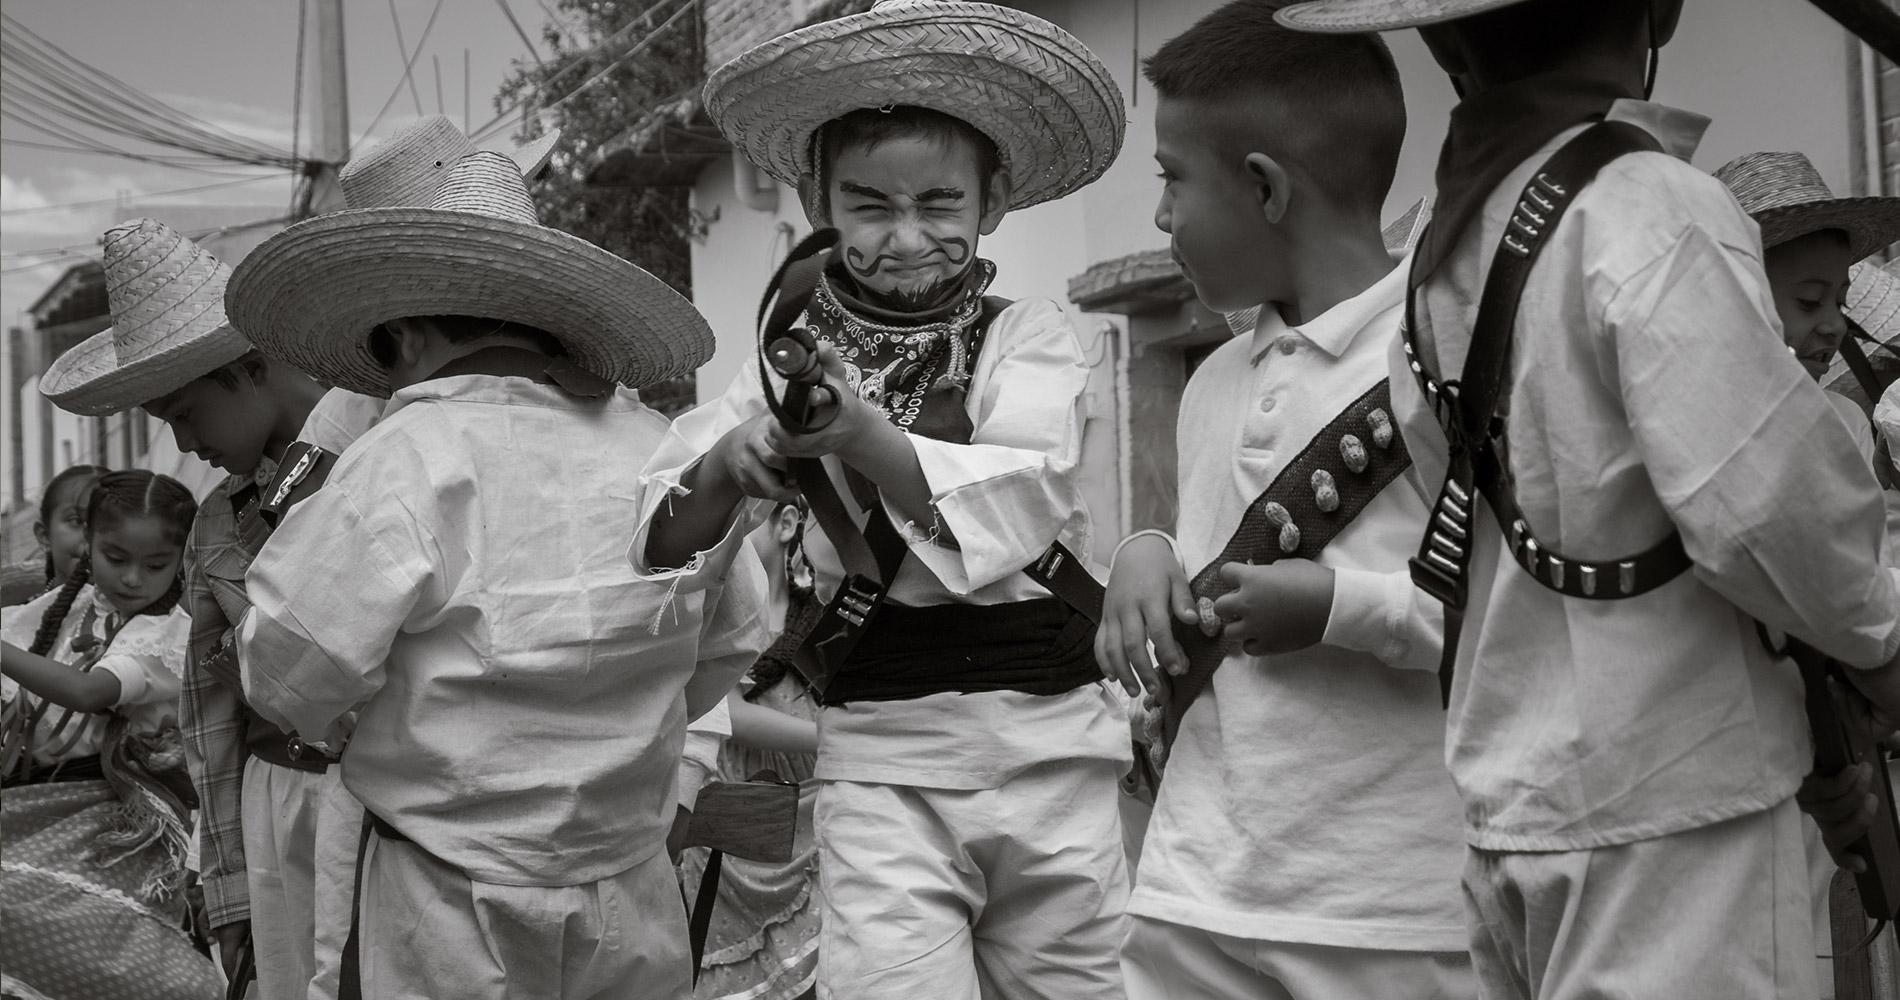 Mexican revolution essay